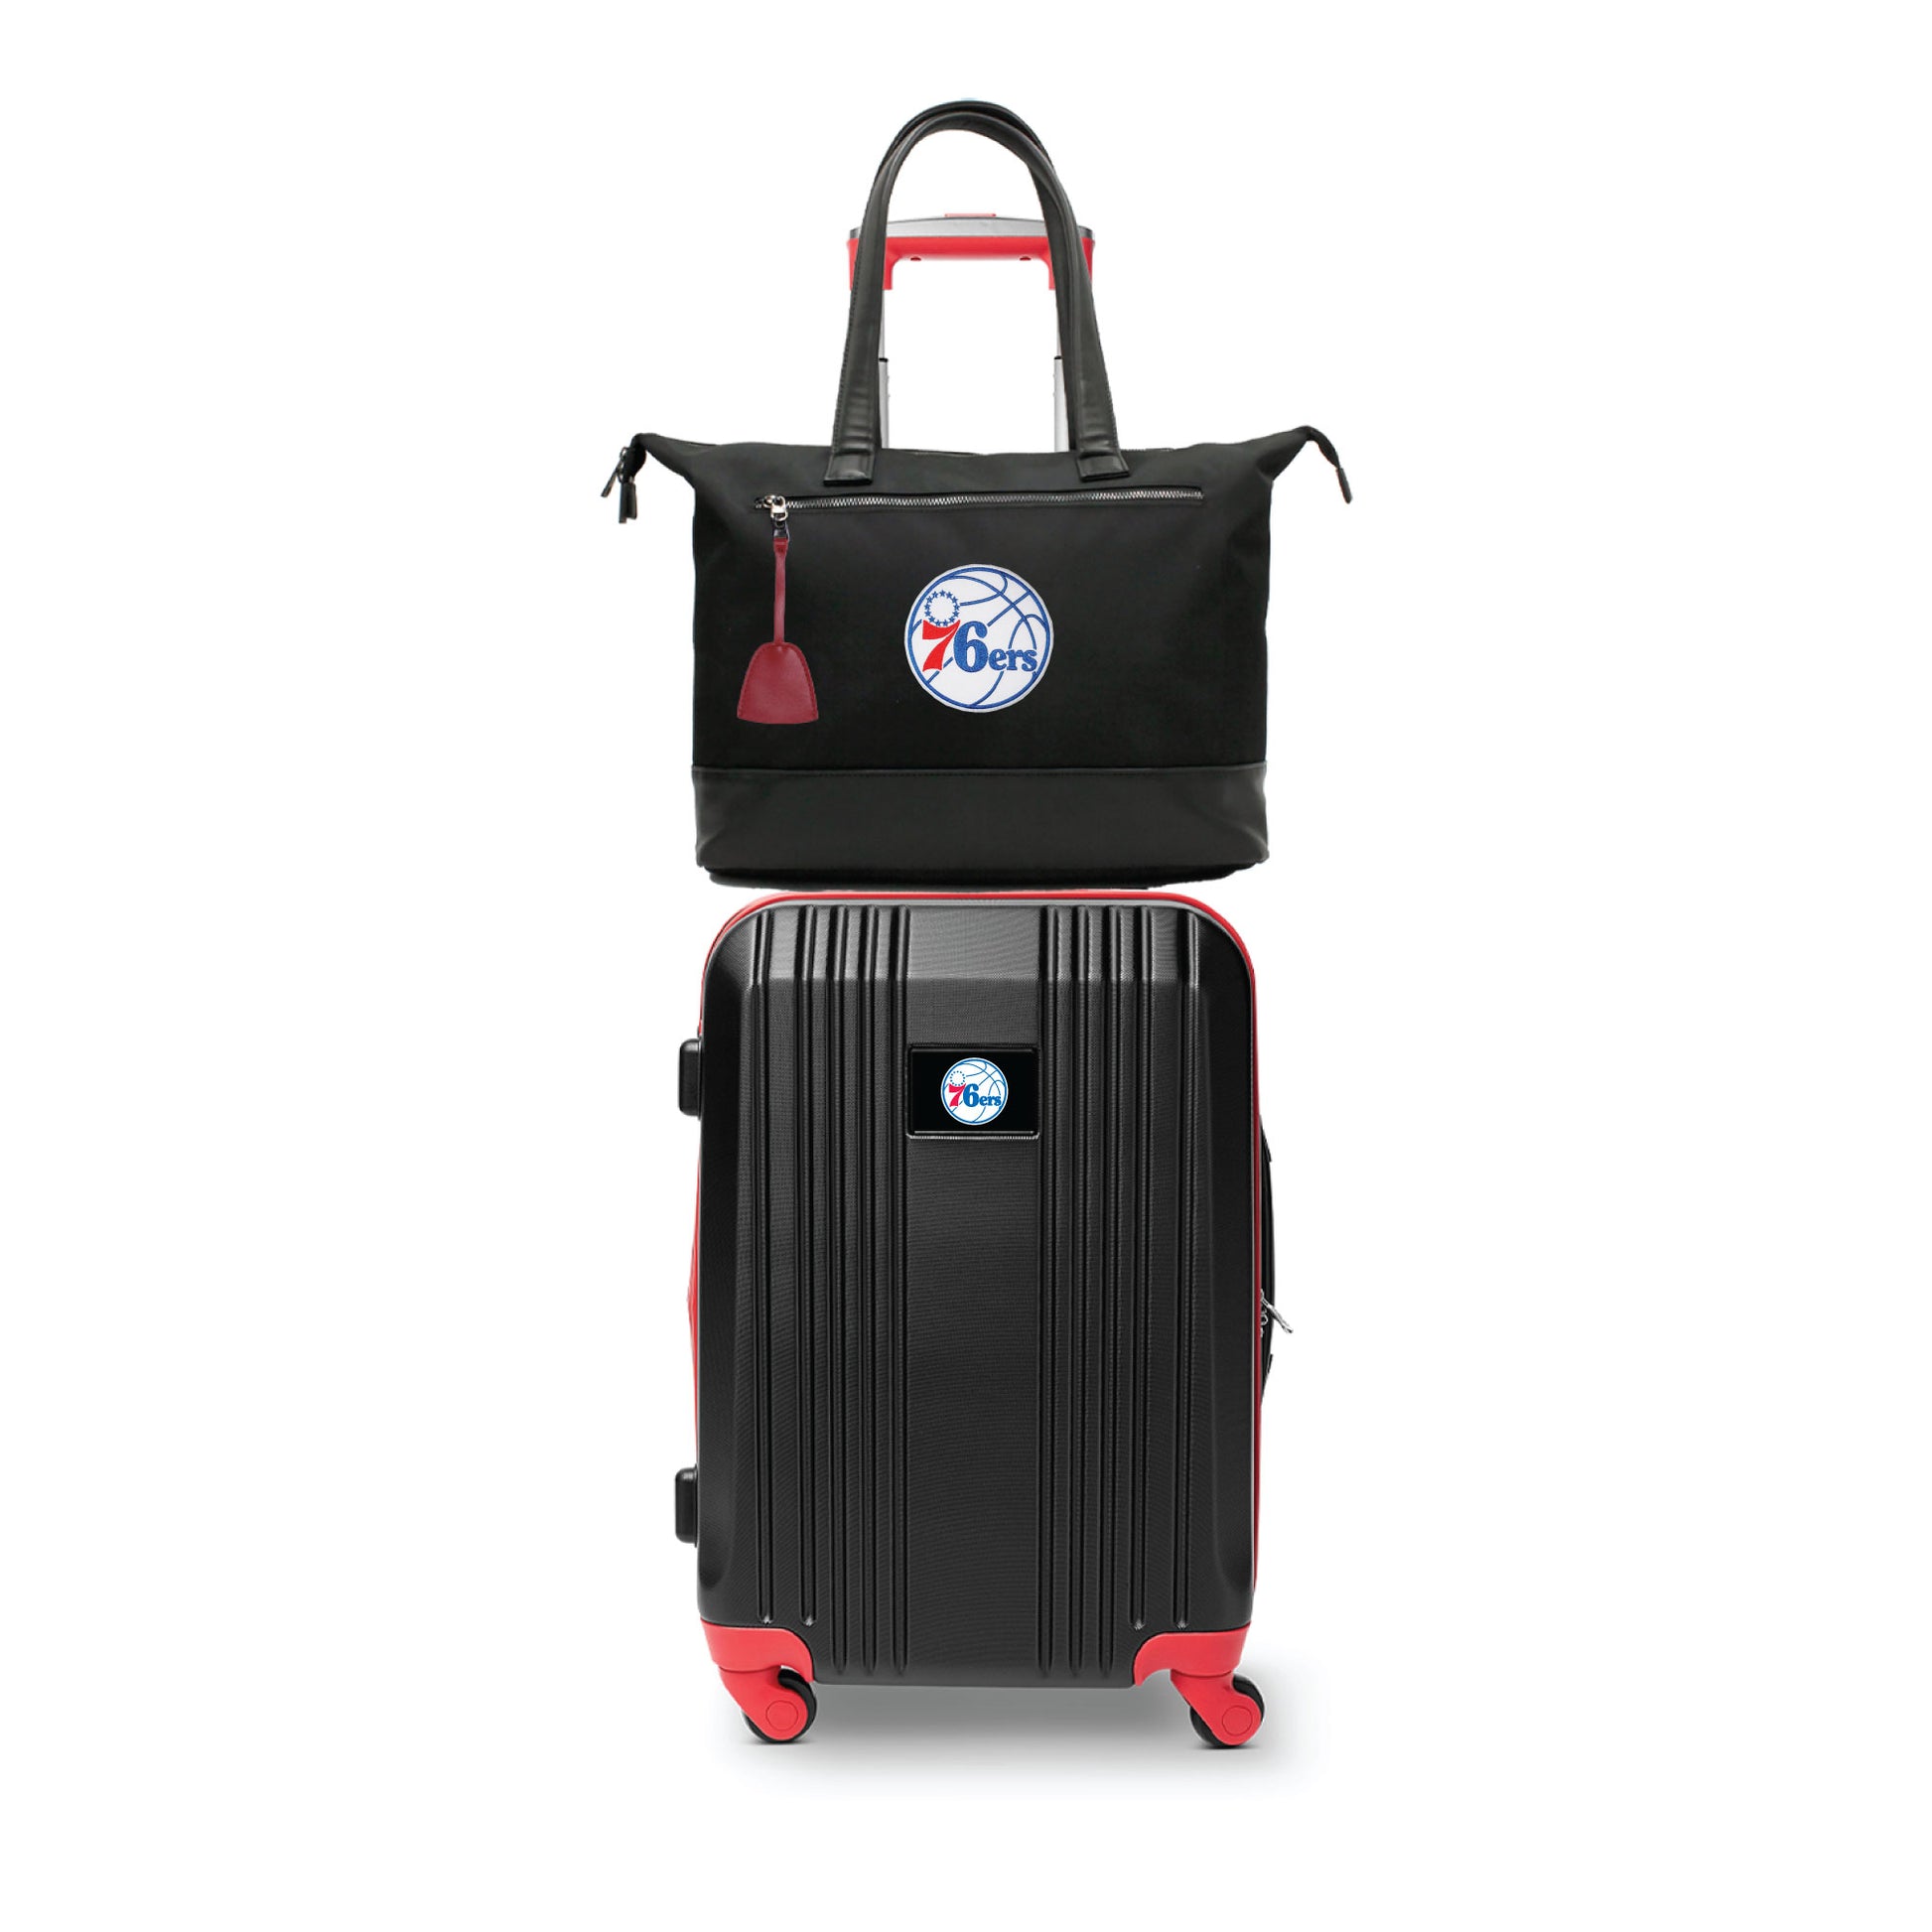 Philadelphia 76Ers Premium Laptop Tote Bag and Luggage Set